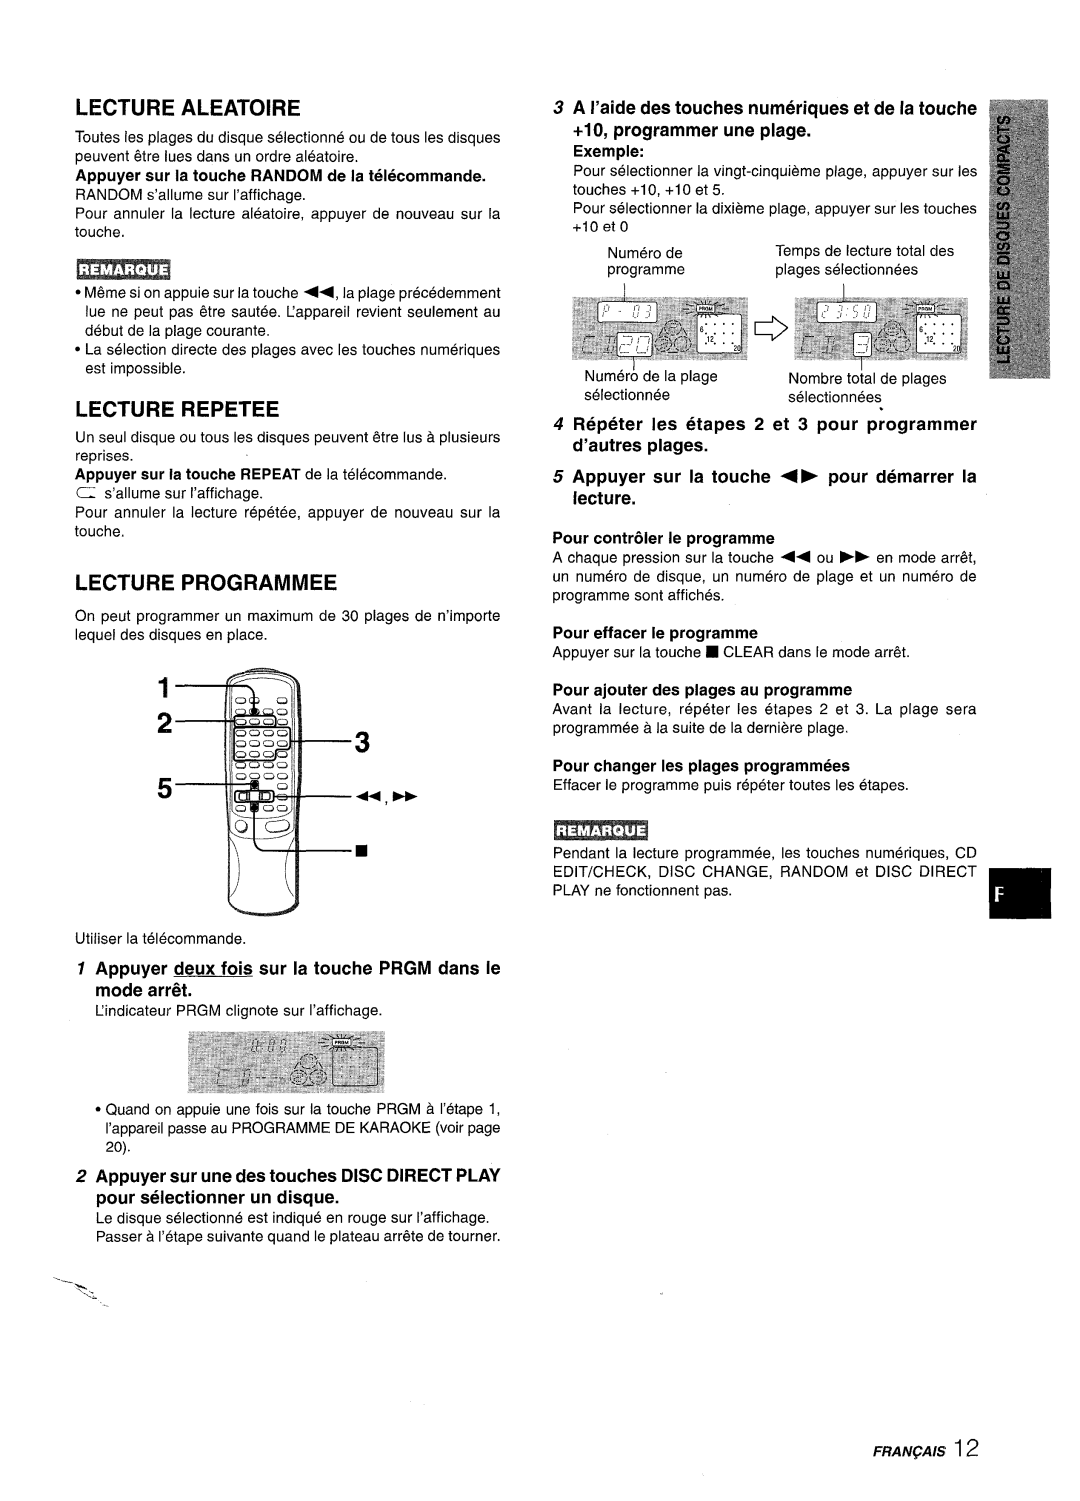 Aiwa NSX-AV800 manual Lecture Aleatoire, Lecture Repetee, Lecture Programmed, Repeter Ies etapes 2 d’autres plages, Exemple 